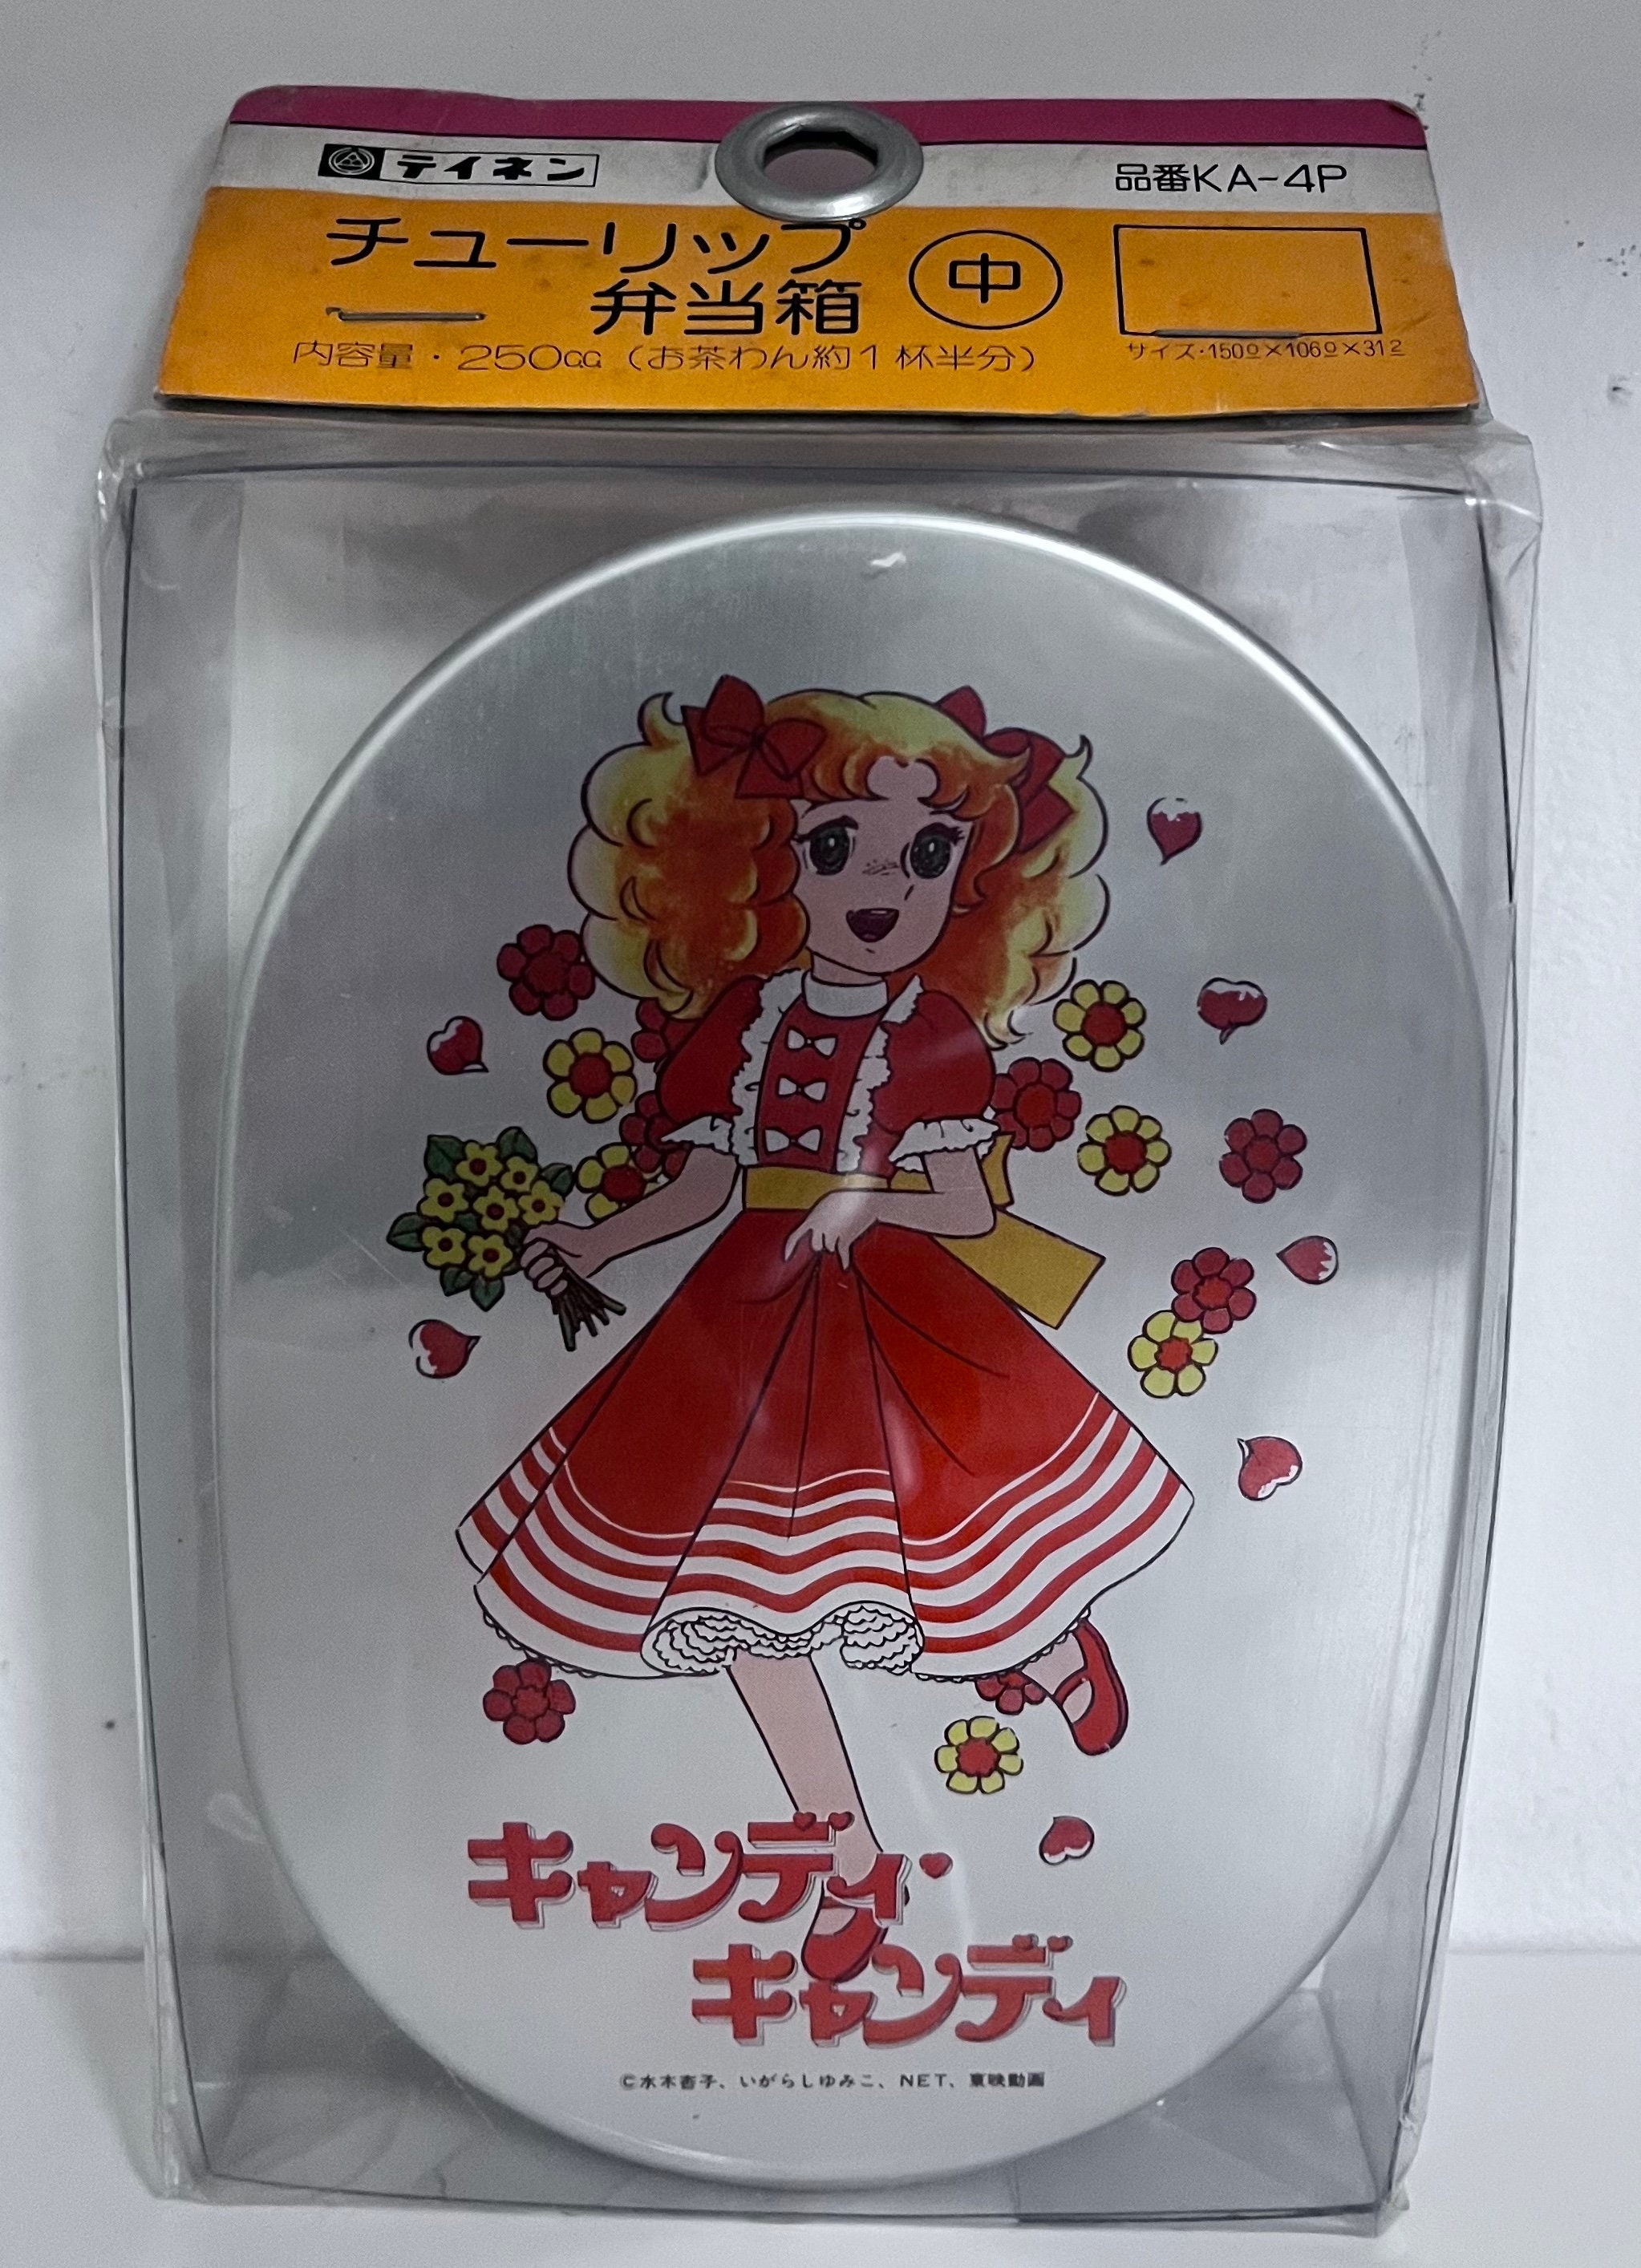 Candy Candy Anime Merchandise  MercadoLibre 